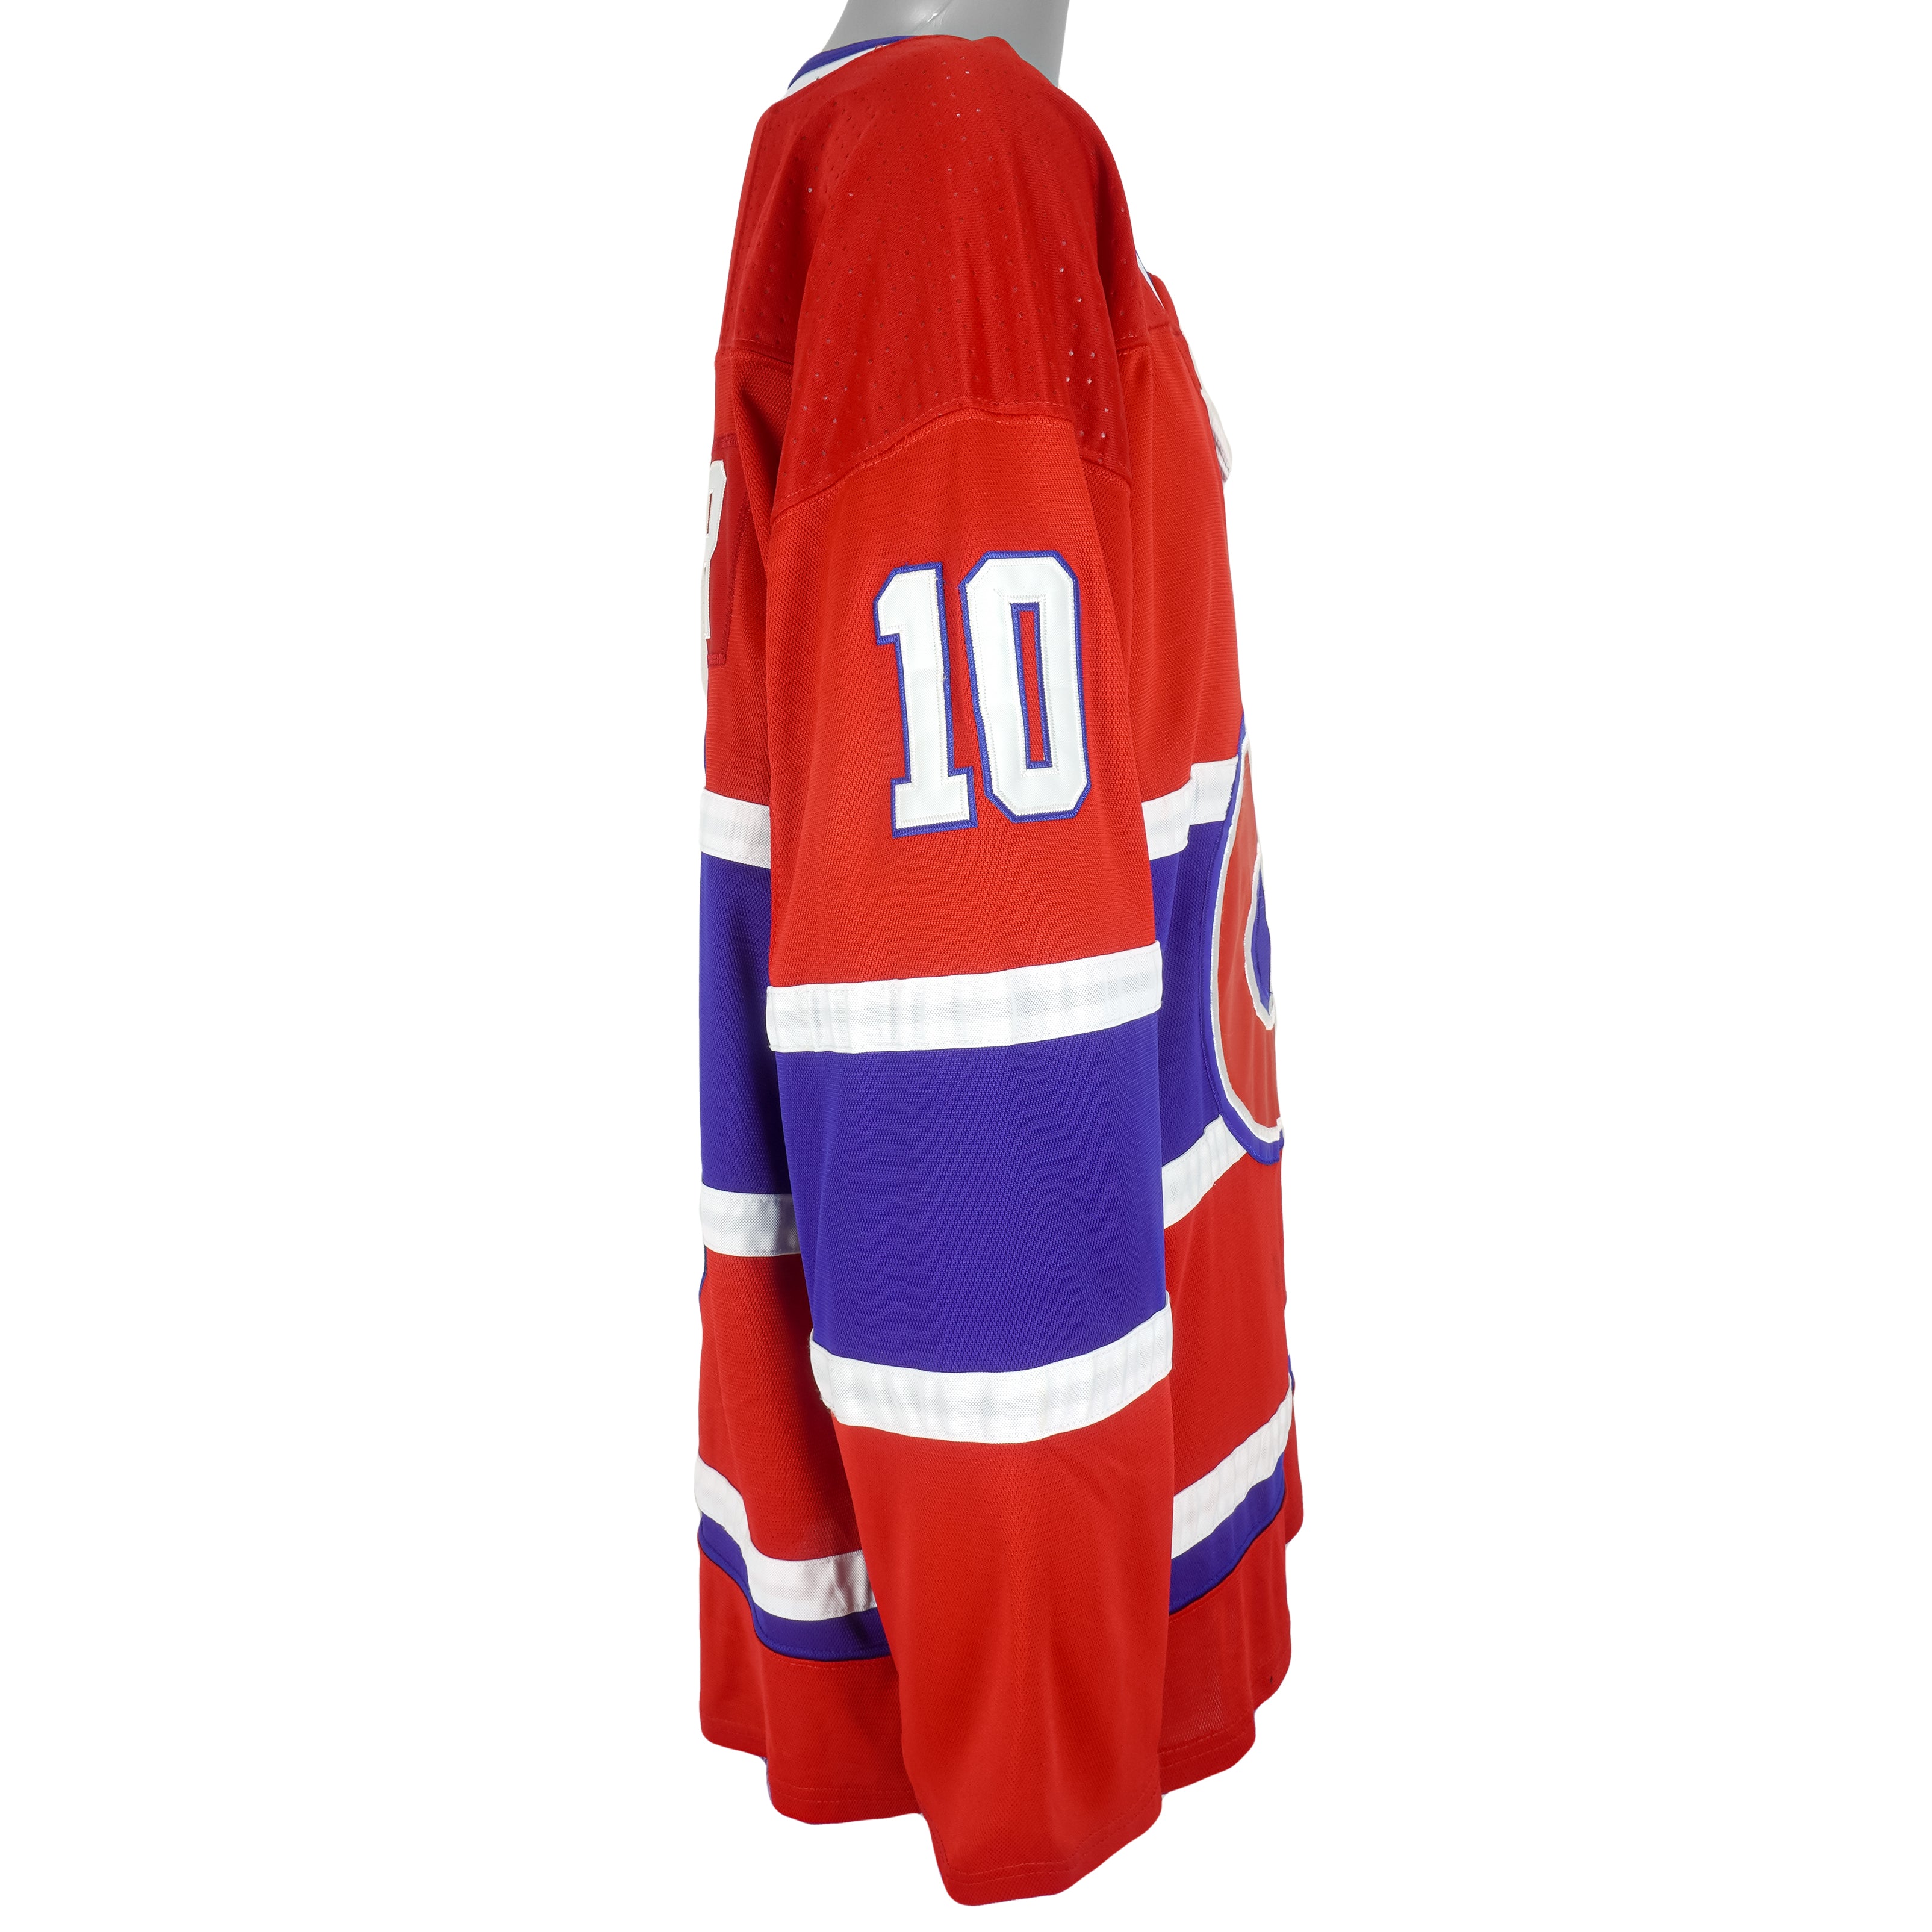 Adidas Montreal Canadiens NHL Fan Shop